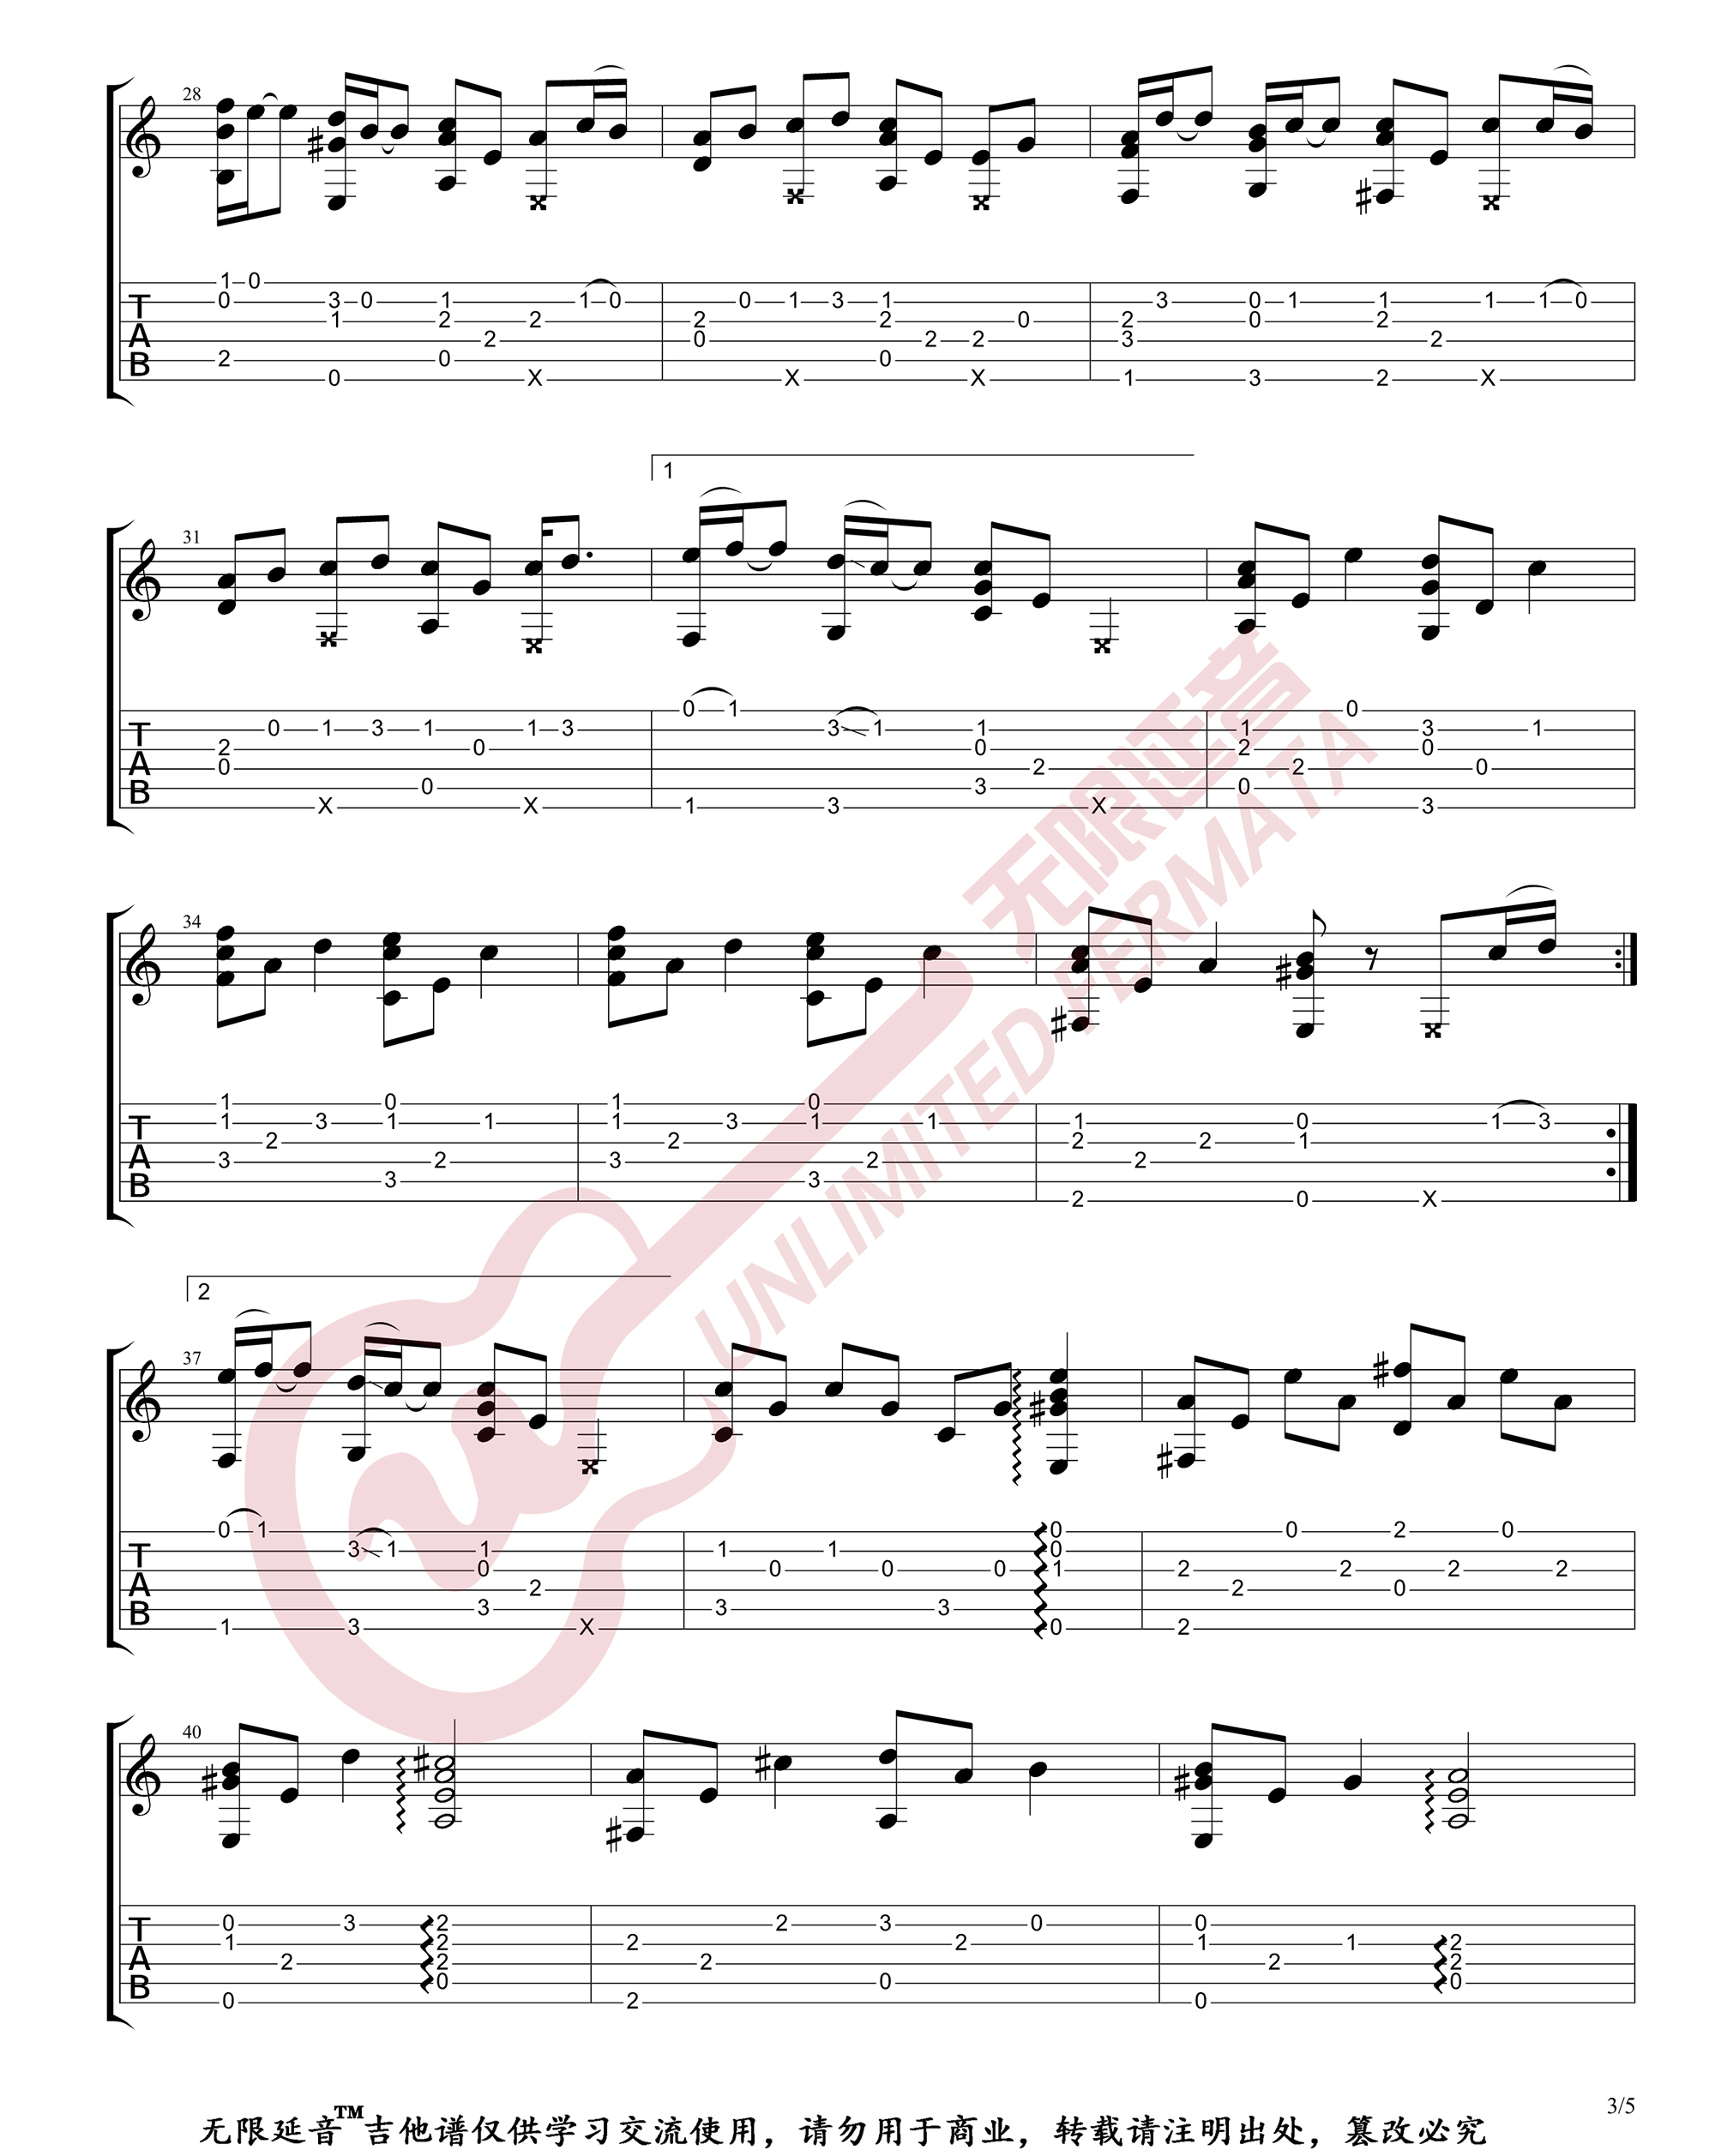 Lemon吉他谱,原版米津玄师歌曲,简单指弹曲谱,高清六线乐谱